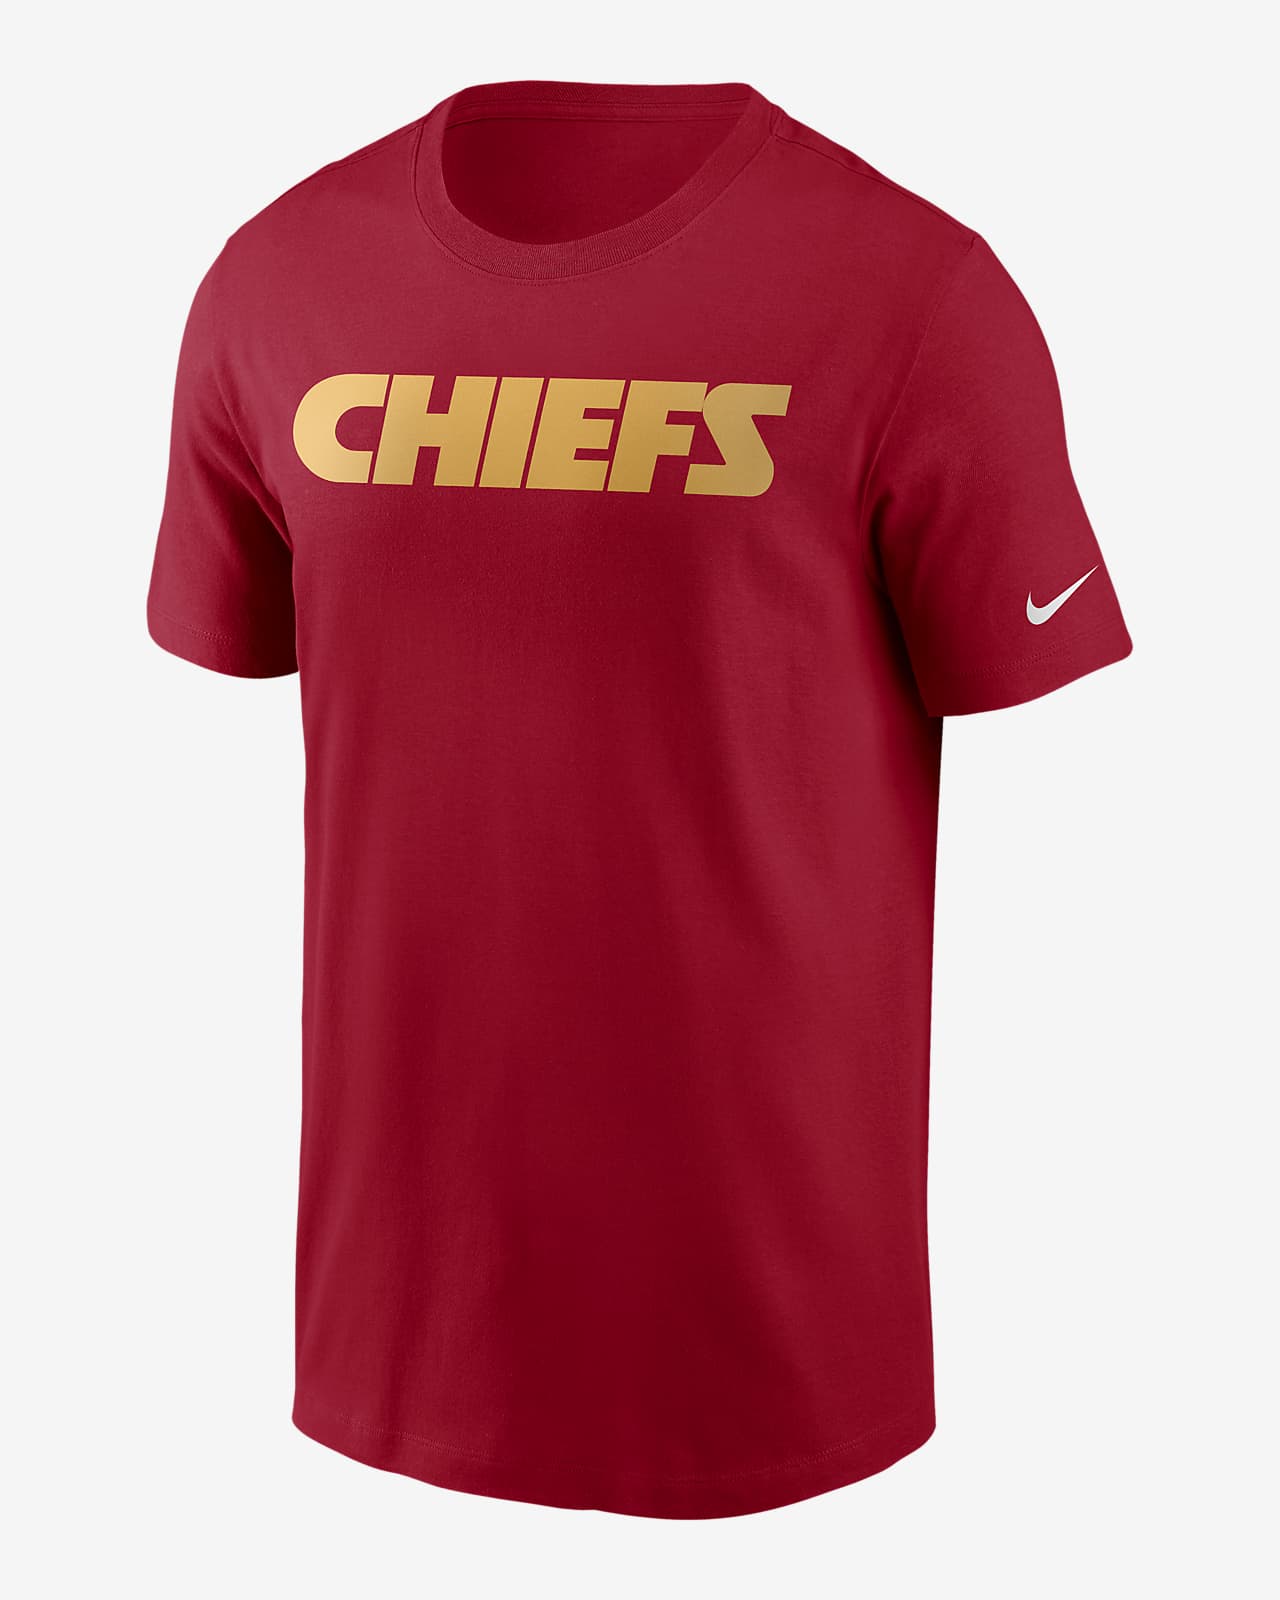 nfl chiefs shirts